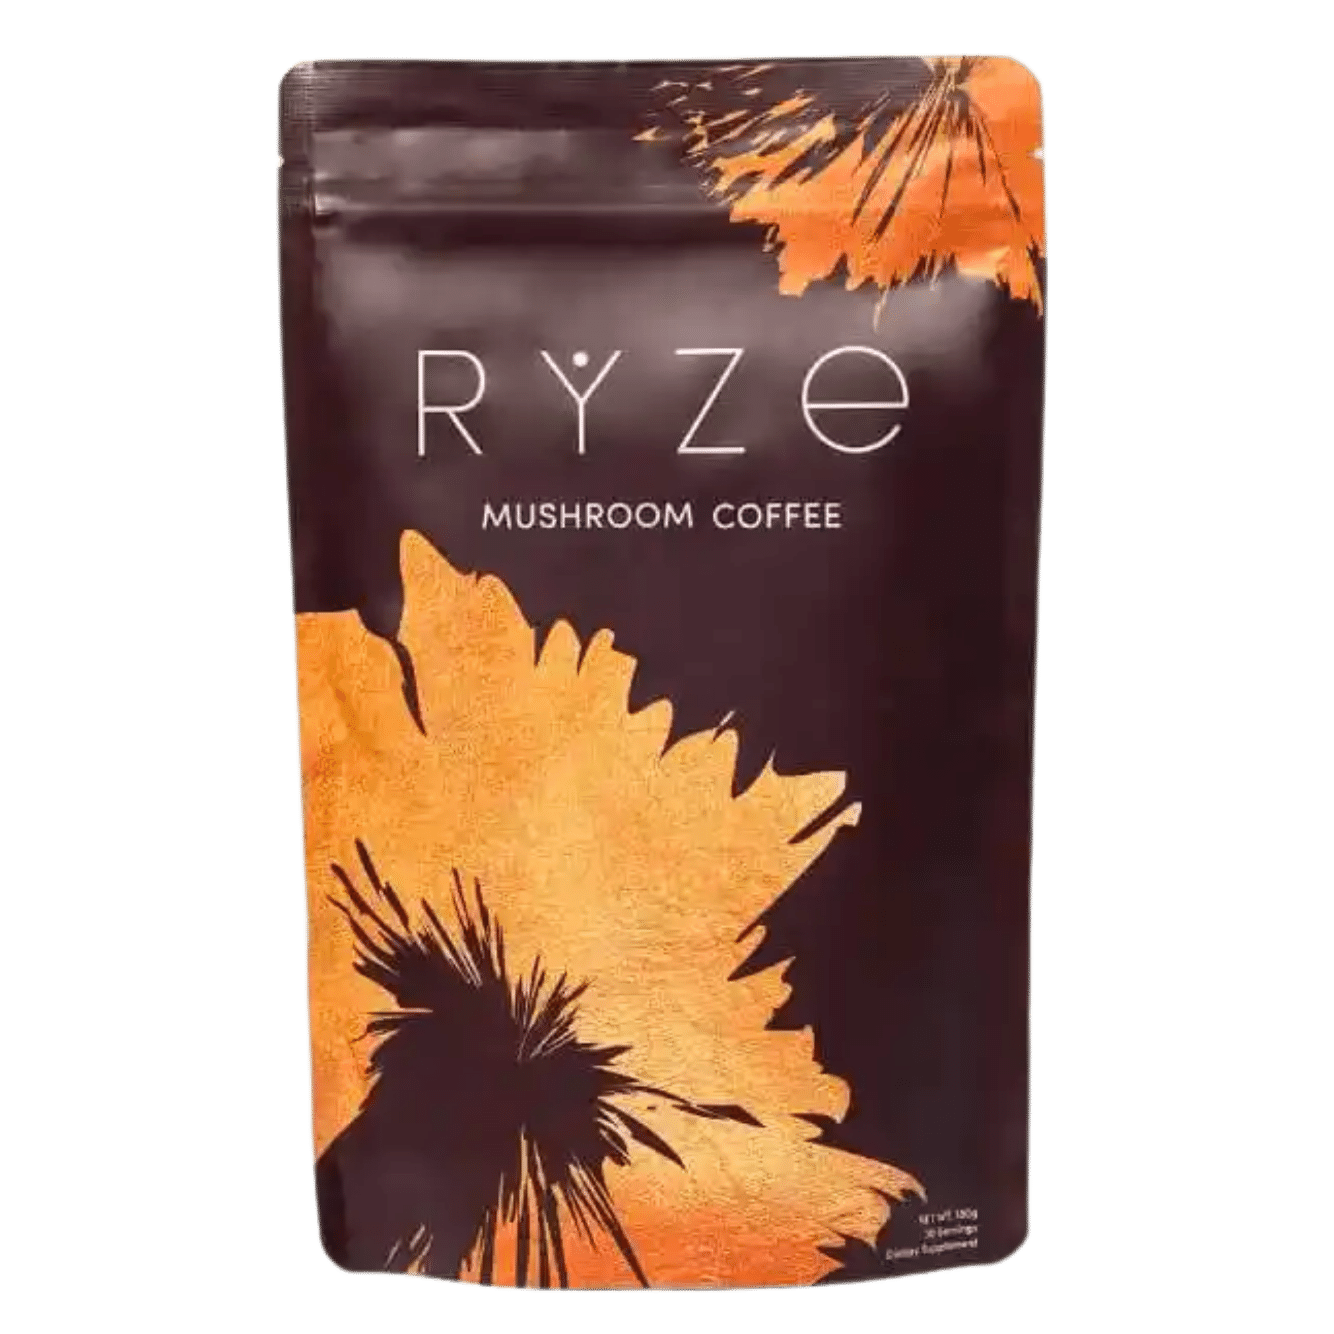 Review of Ryze Mushroom Coffee